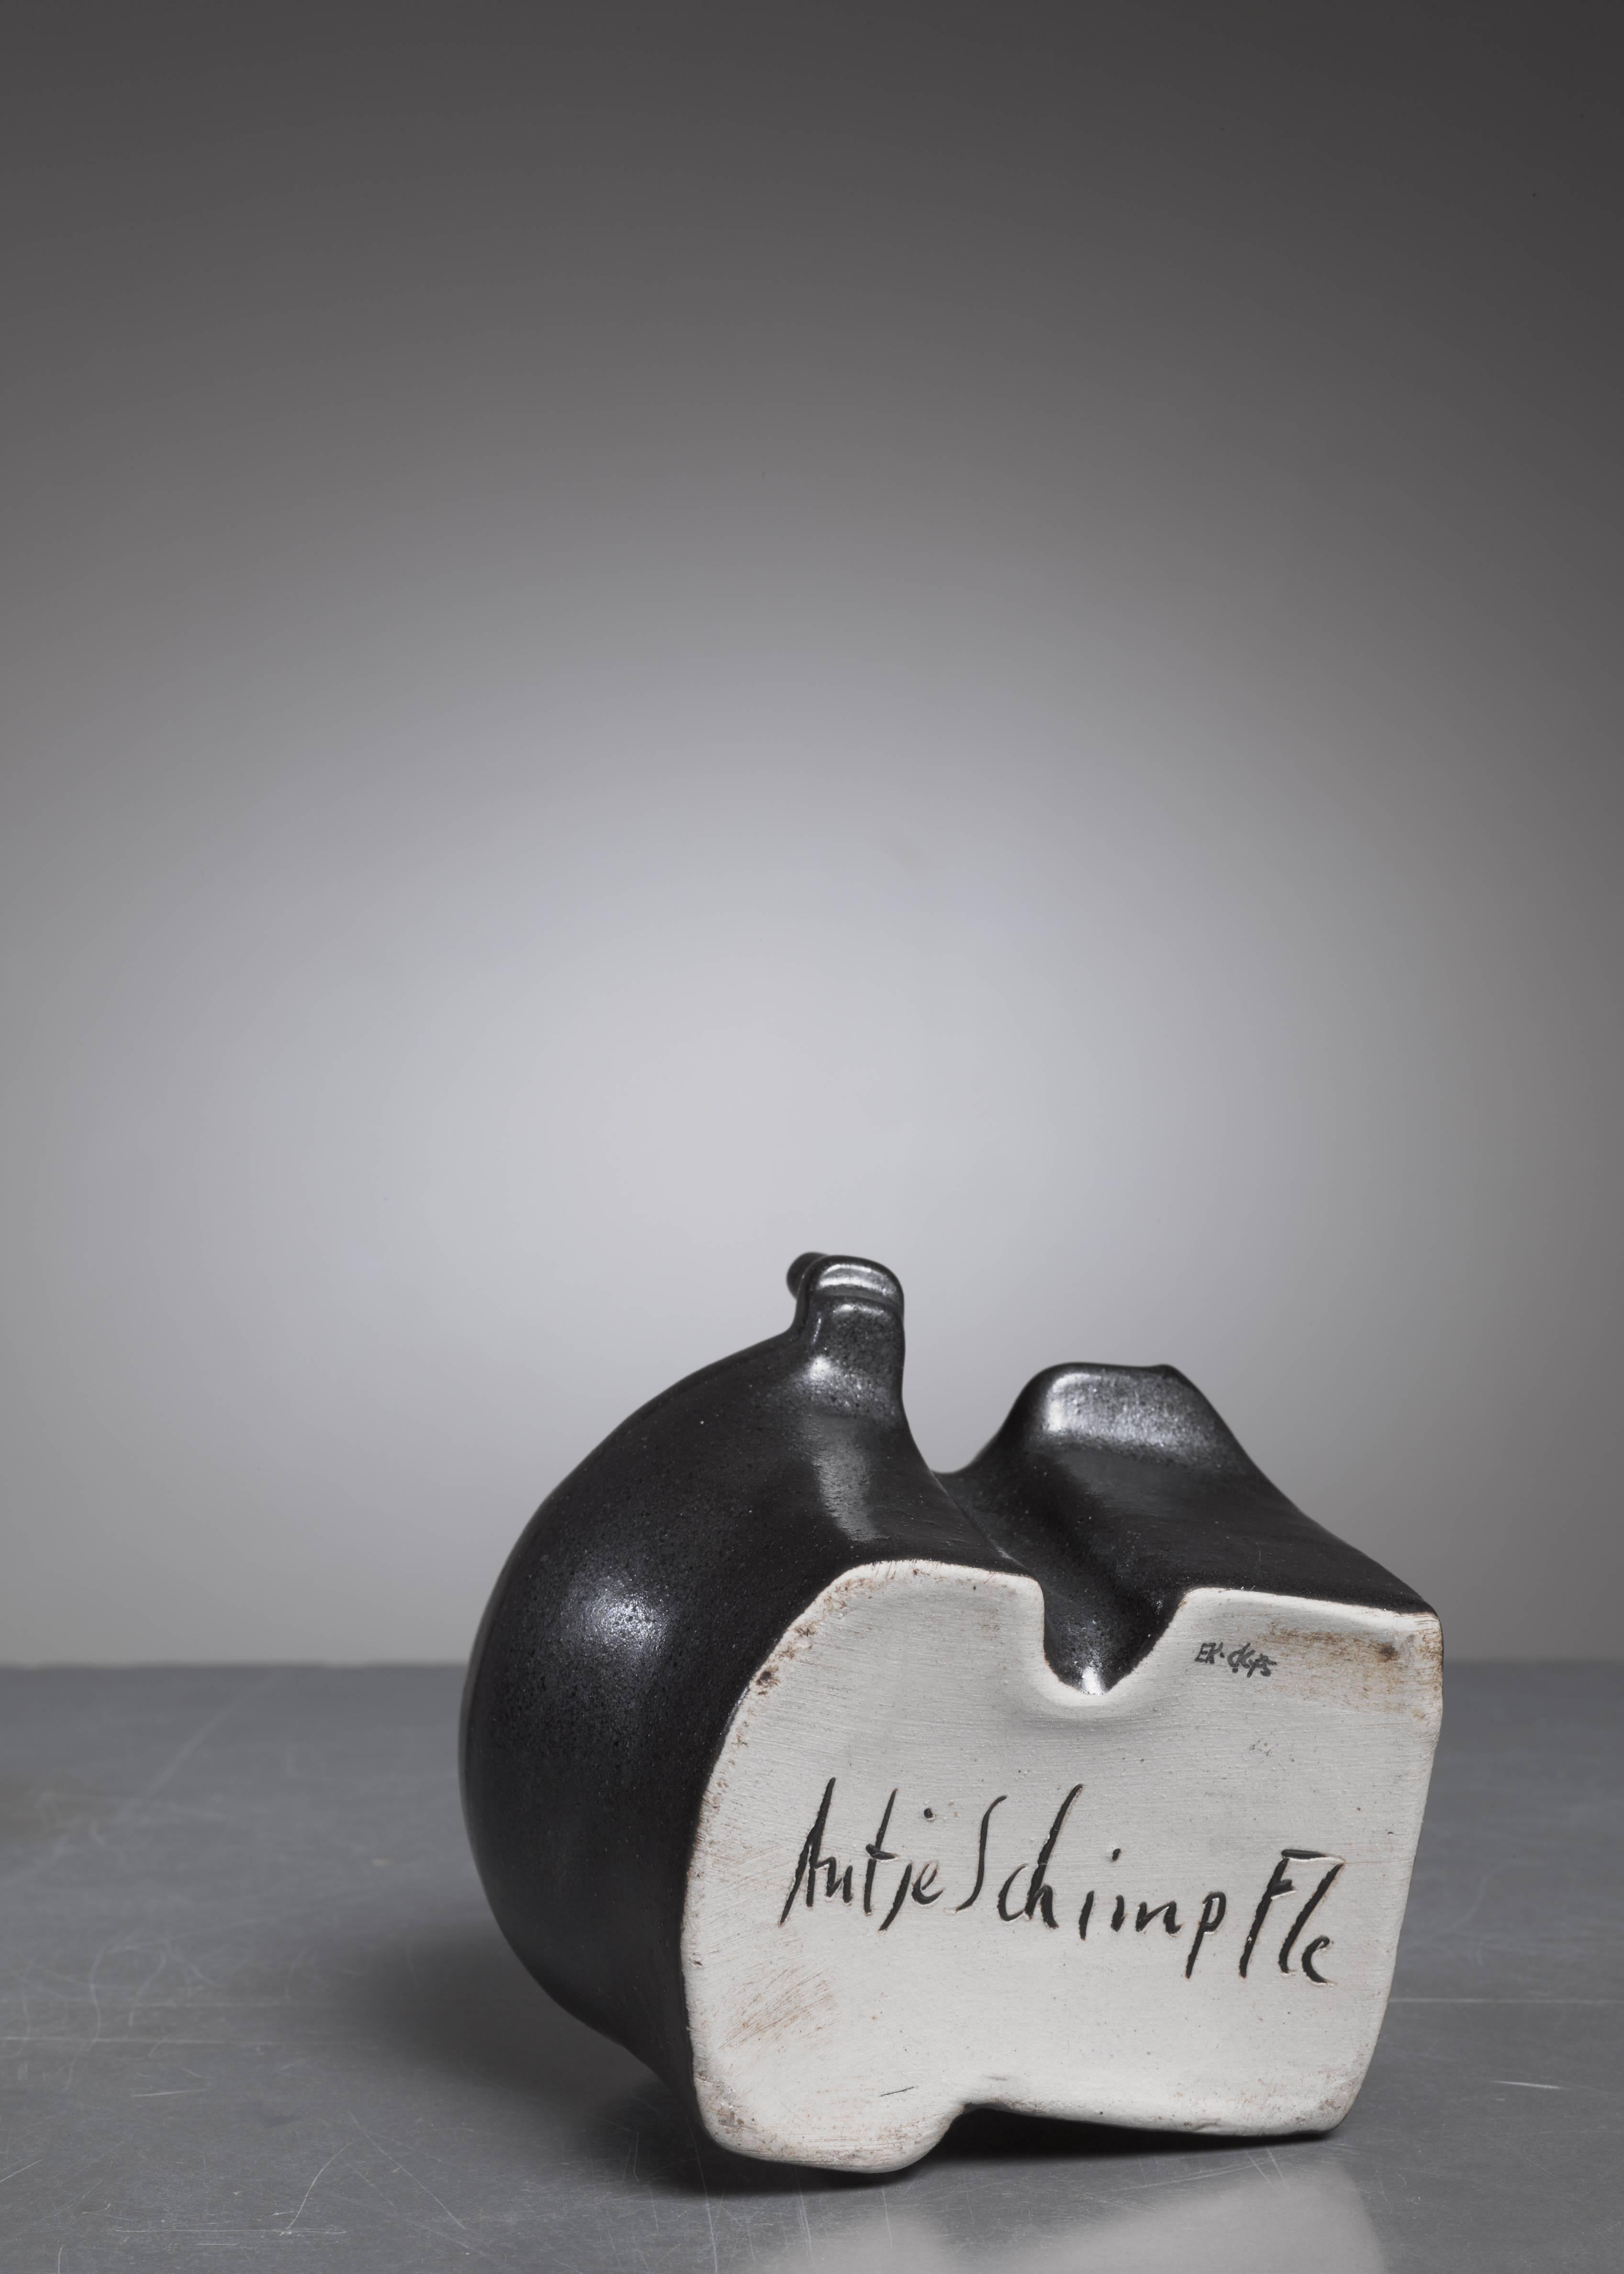 Antje Schimpfle Pair of Sculptural Ceramic Vases, Germany, 1980s For Sale 2